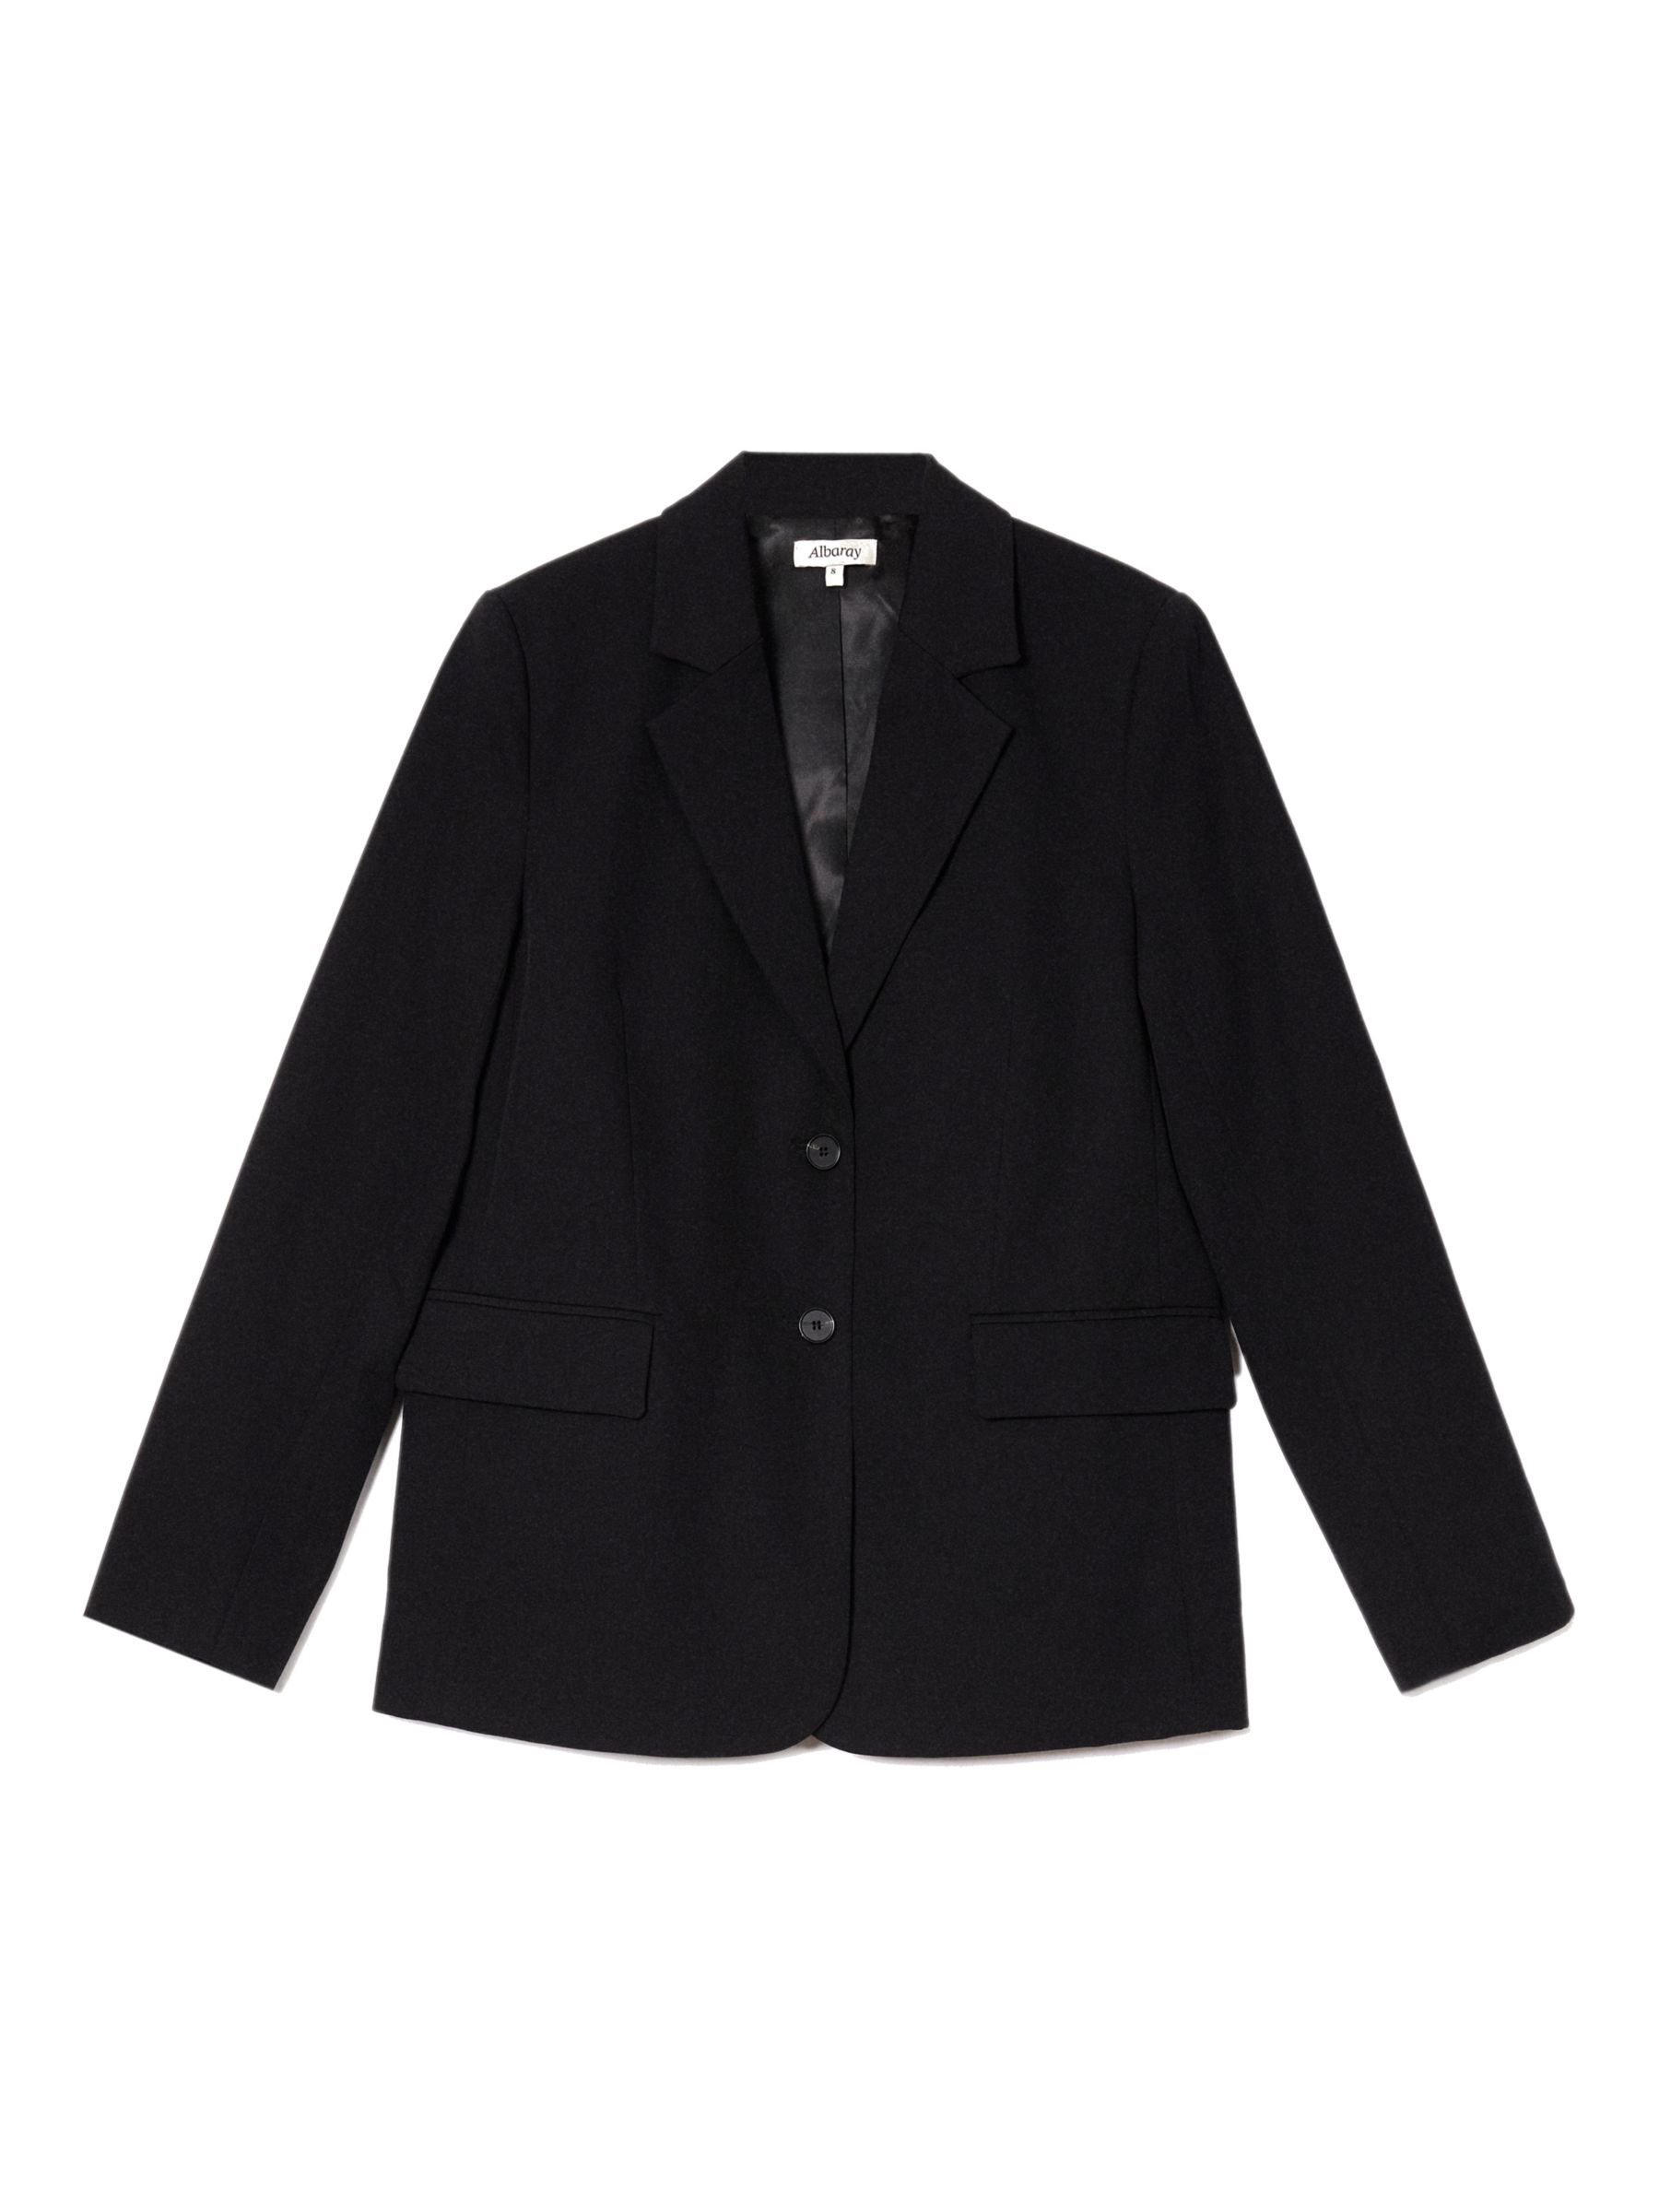 Albaray Relaxed Tailored Jacket, Black, 8